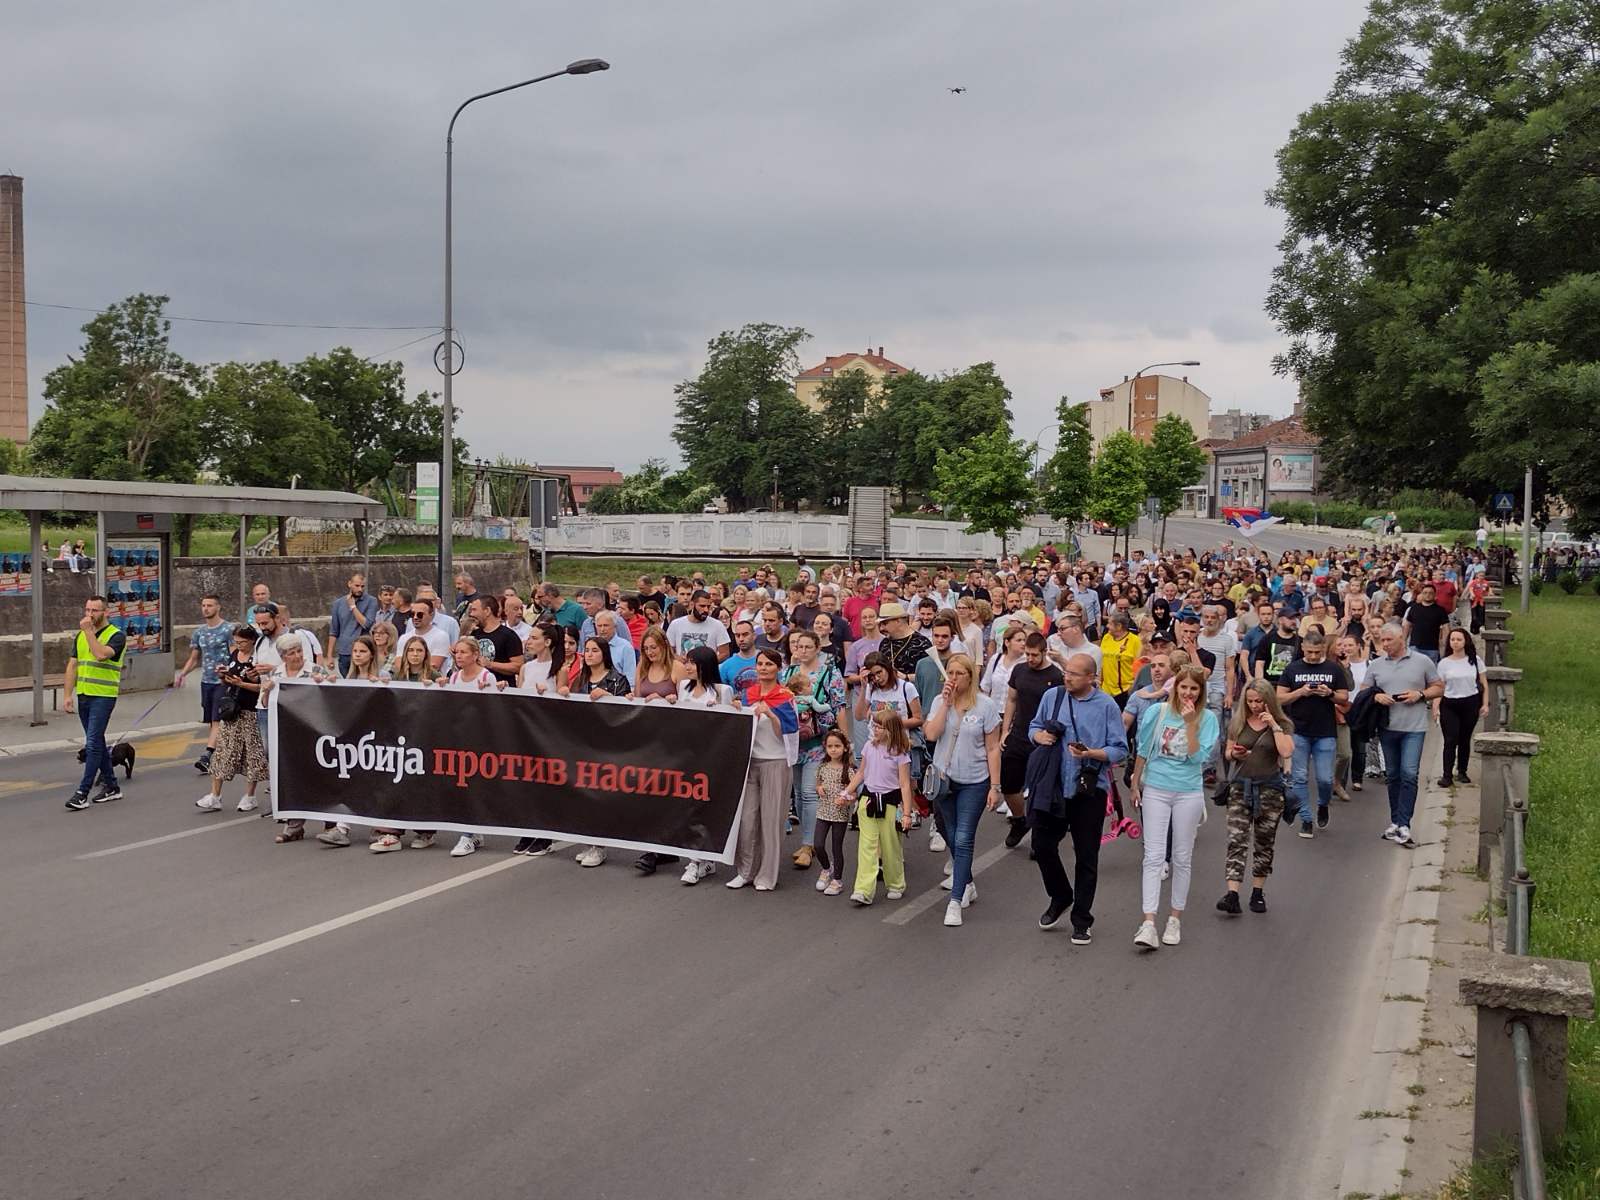 Protest "Srbija protiv nasilja" u preko 10 gradova obeležile šetnje, blokade puteva i zahtevi za ostavkama (FOTO, VIDEO) 59